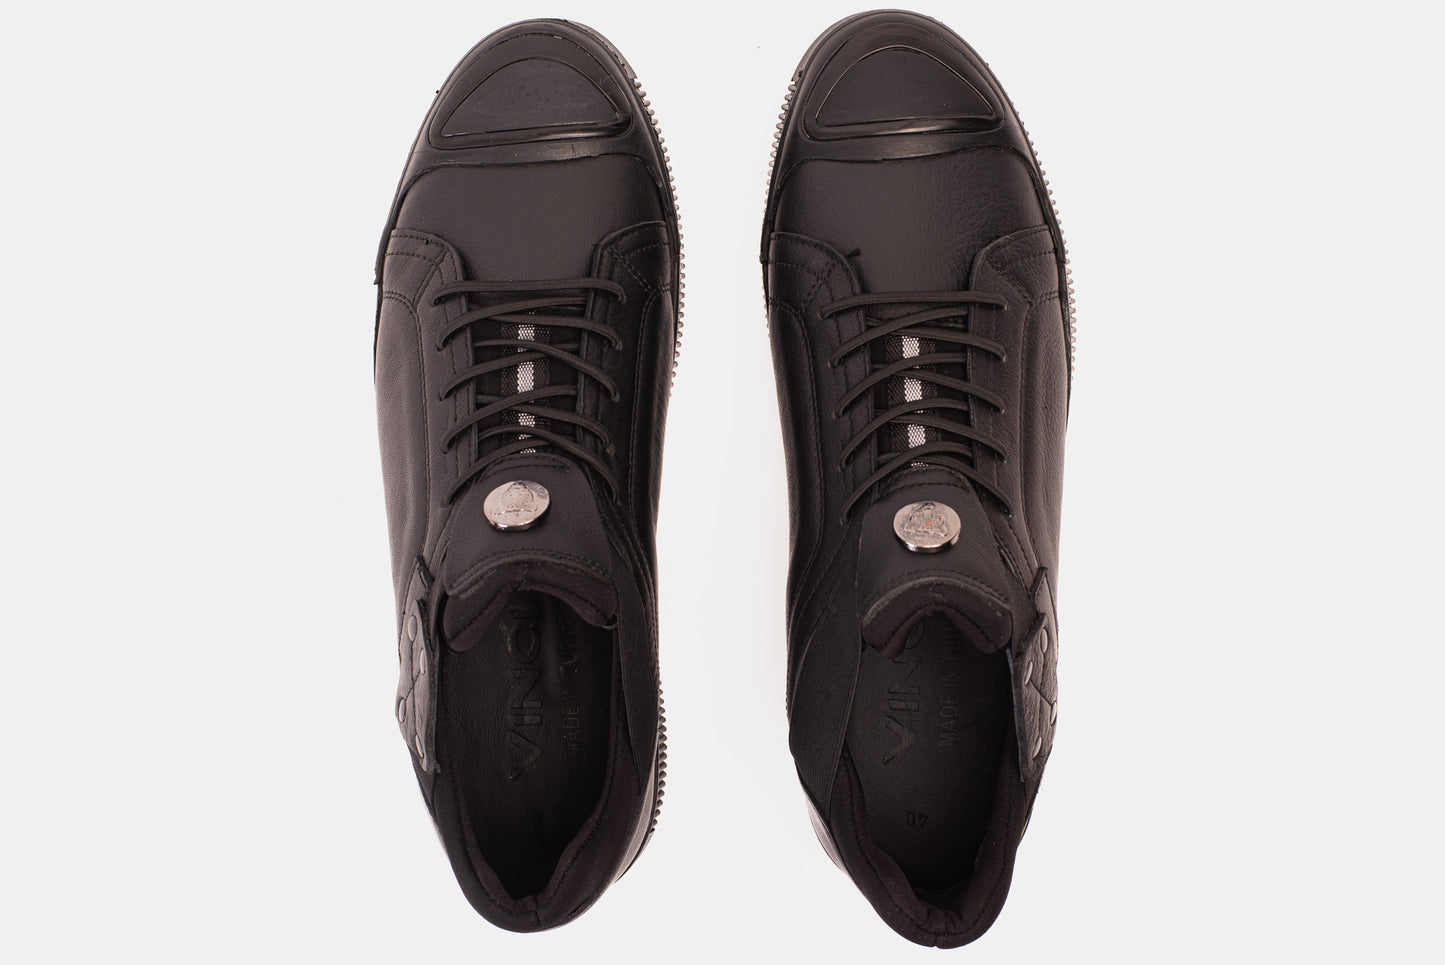 The Mumbai Black Leather Men Sneaker